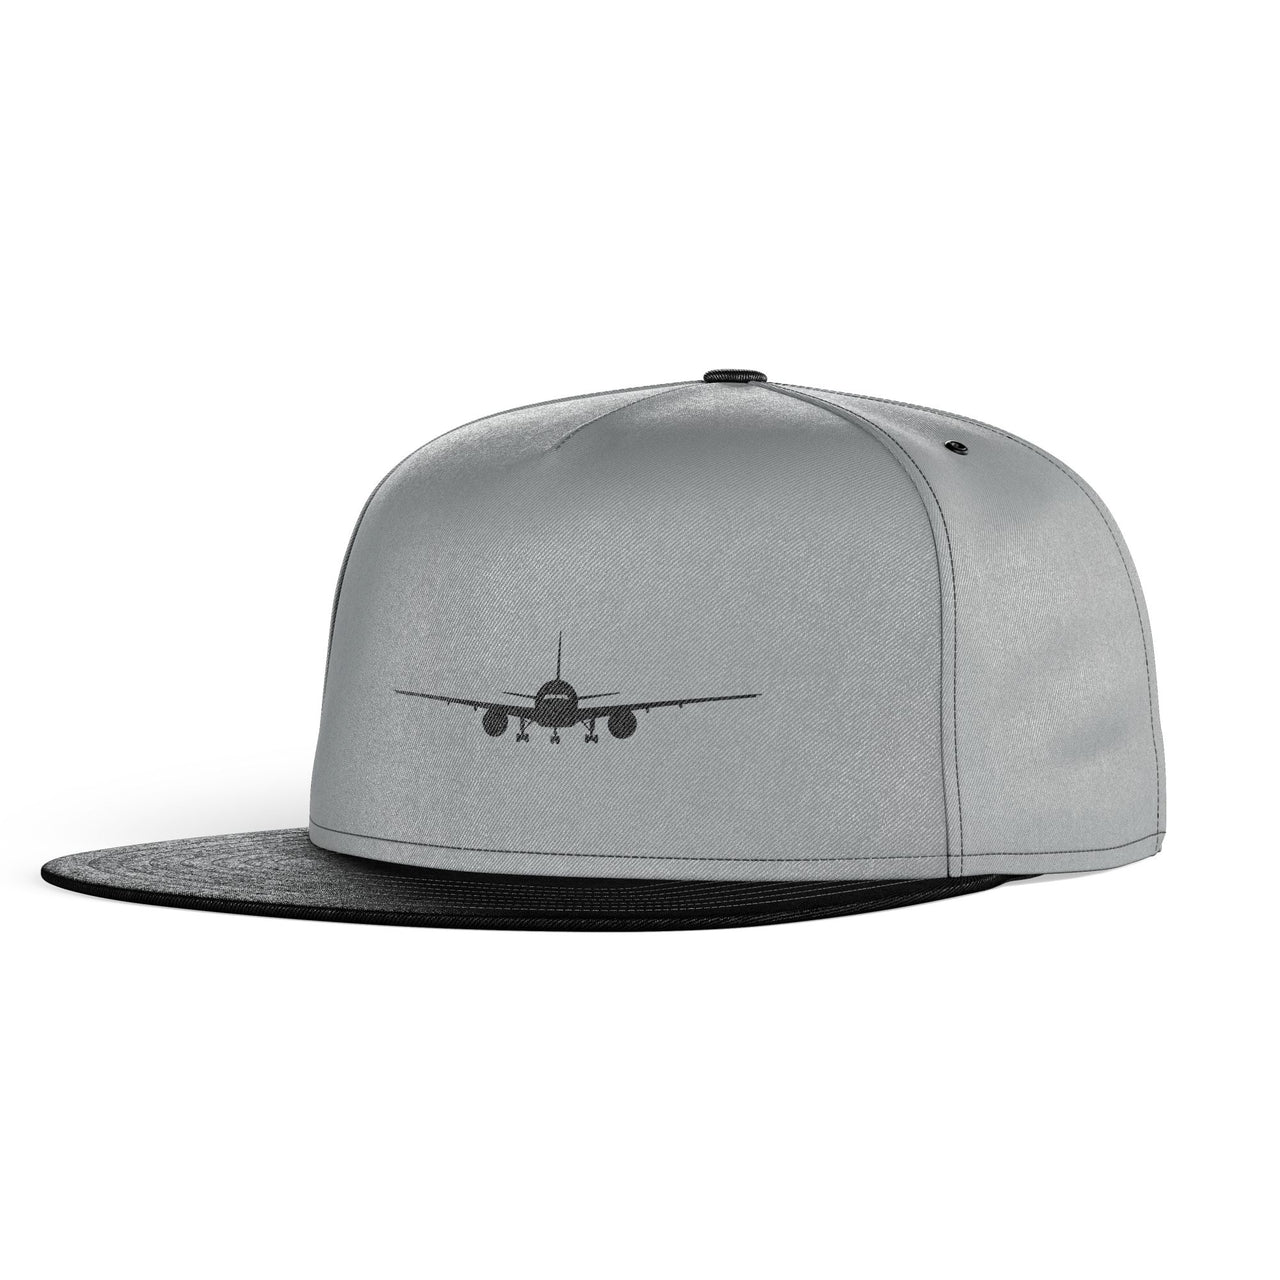 Boeing 777 Silhouette Designed Snapback Caps & Hats